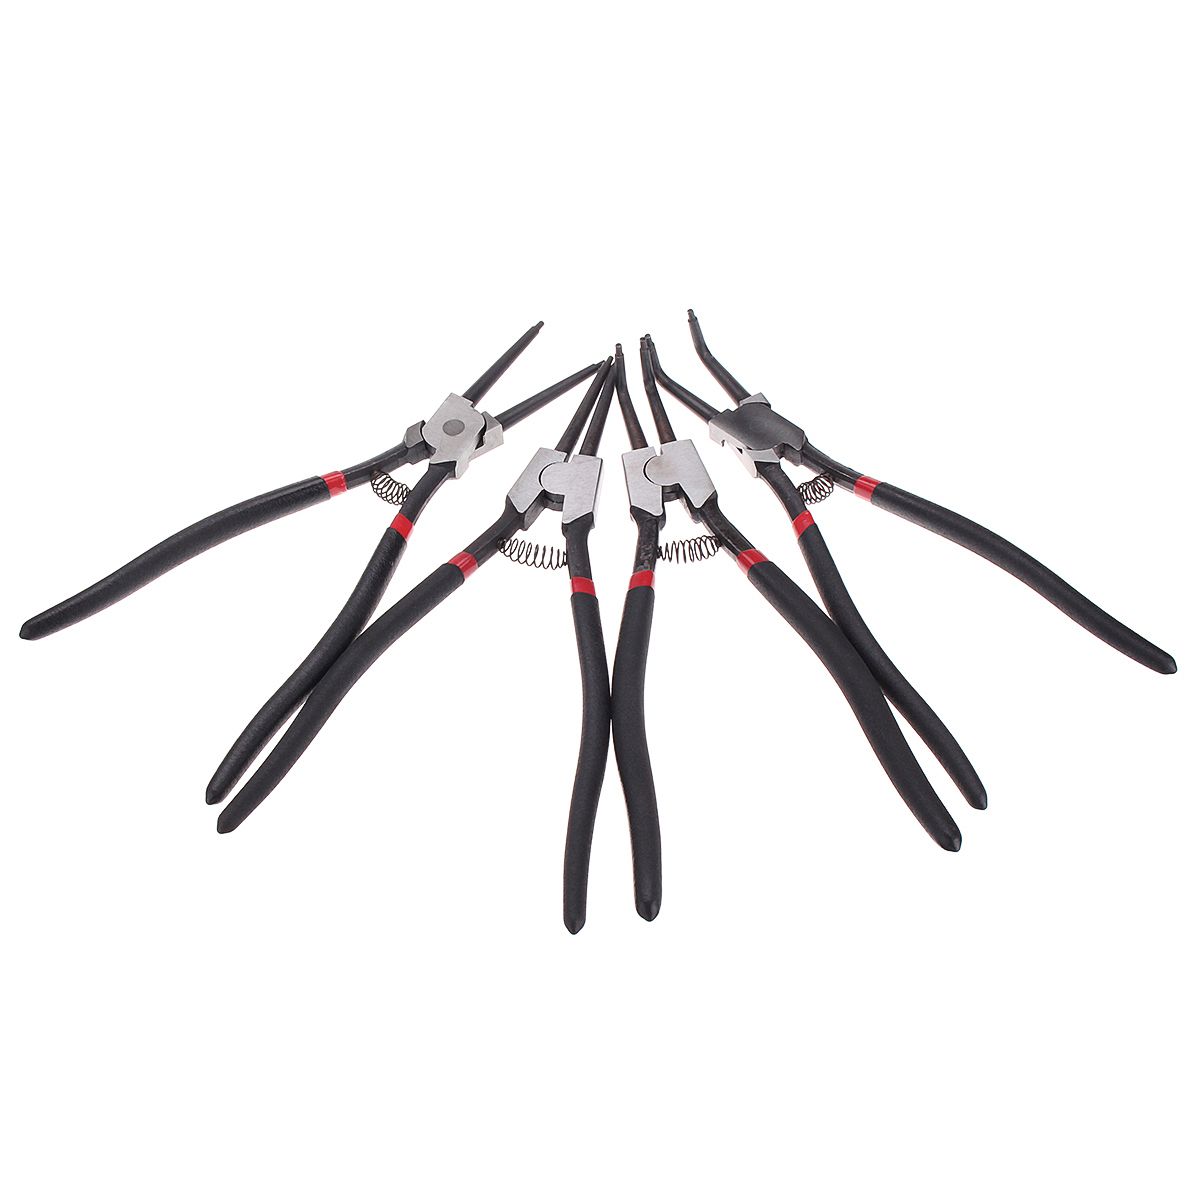 13-Inch-Ring-Steel-Snap-Pliers-Internal-External-Straight-Bent-Long-Grip-Tool-Kit-1448926